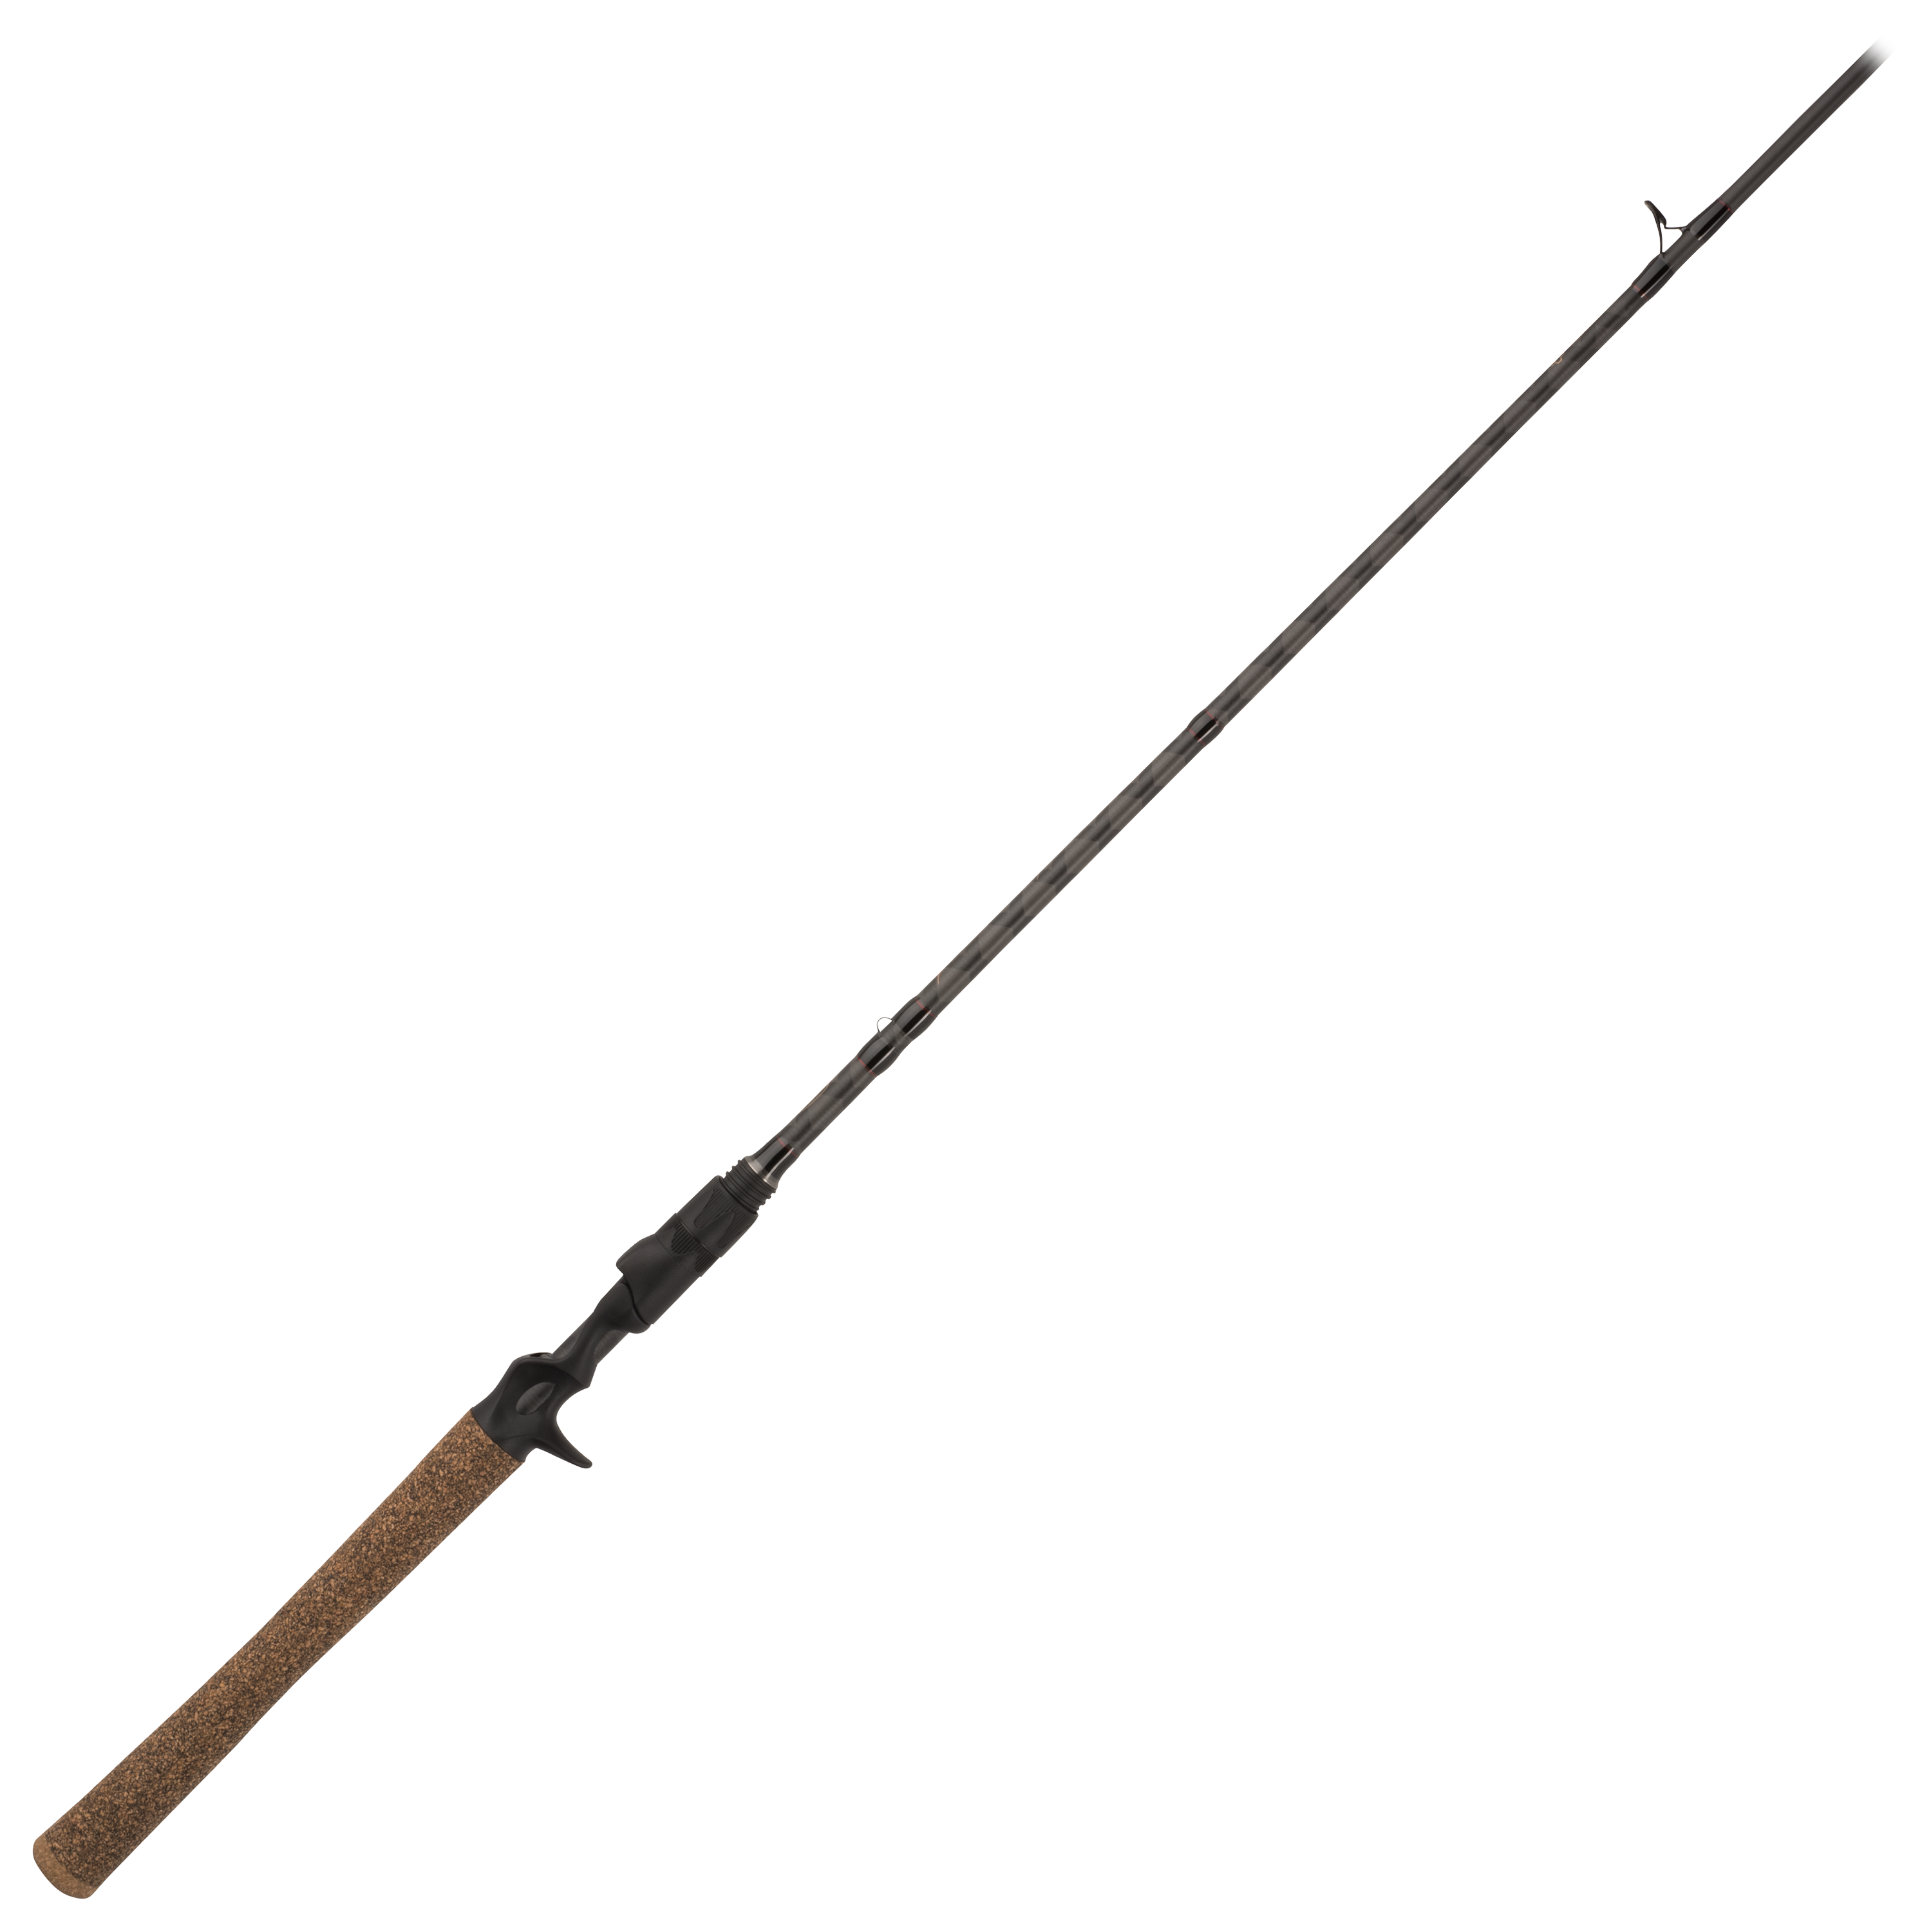 P] First rod and reel. 7' M Berkley Lightning Rod. Pflueger Trion